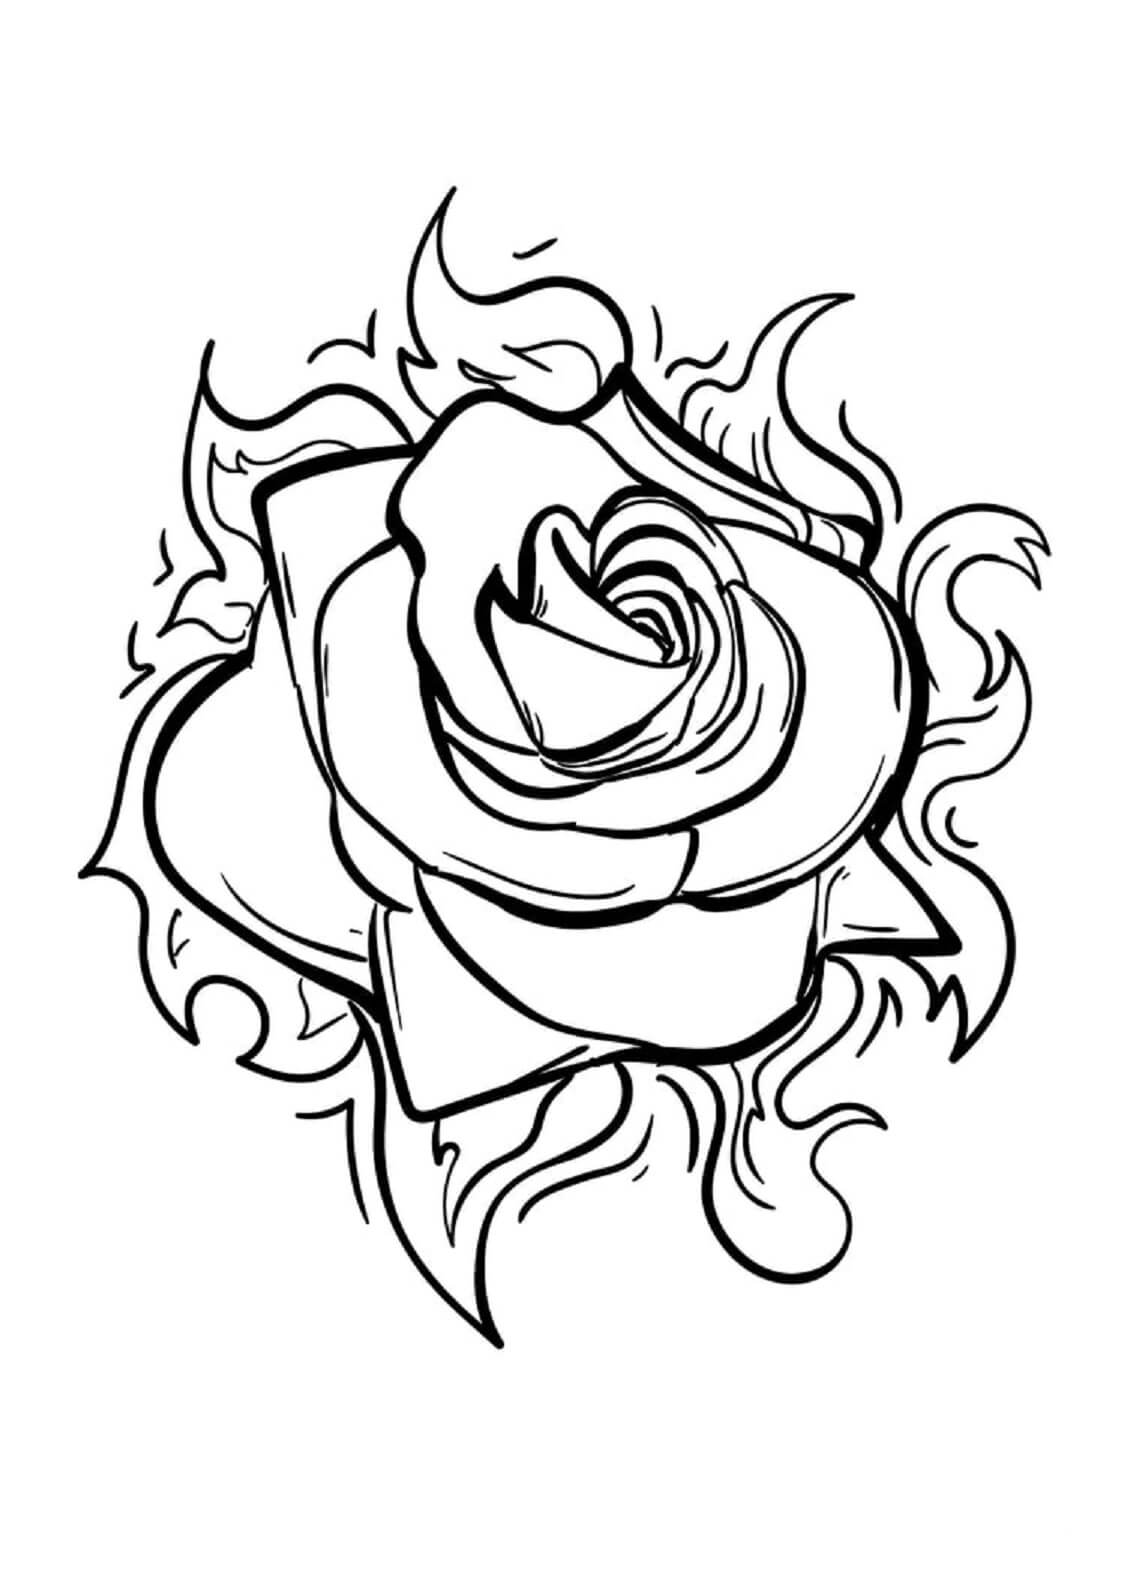 Rose Flamboyante coloring page